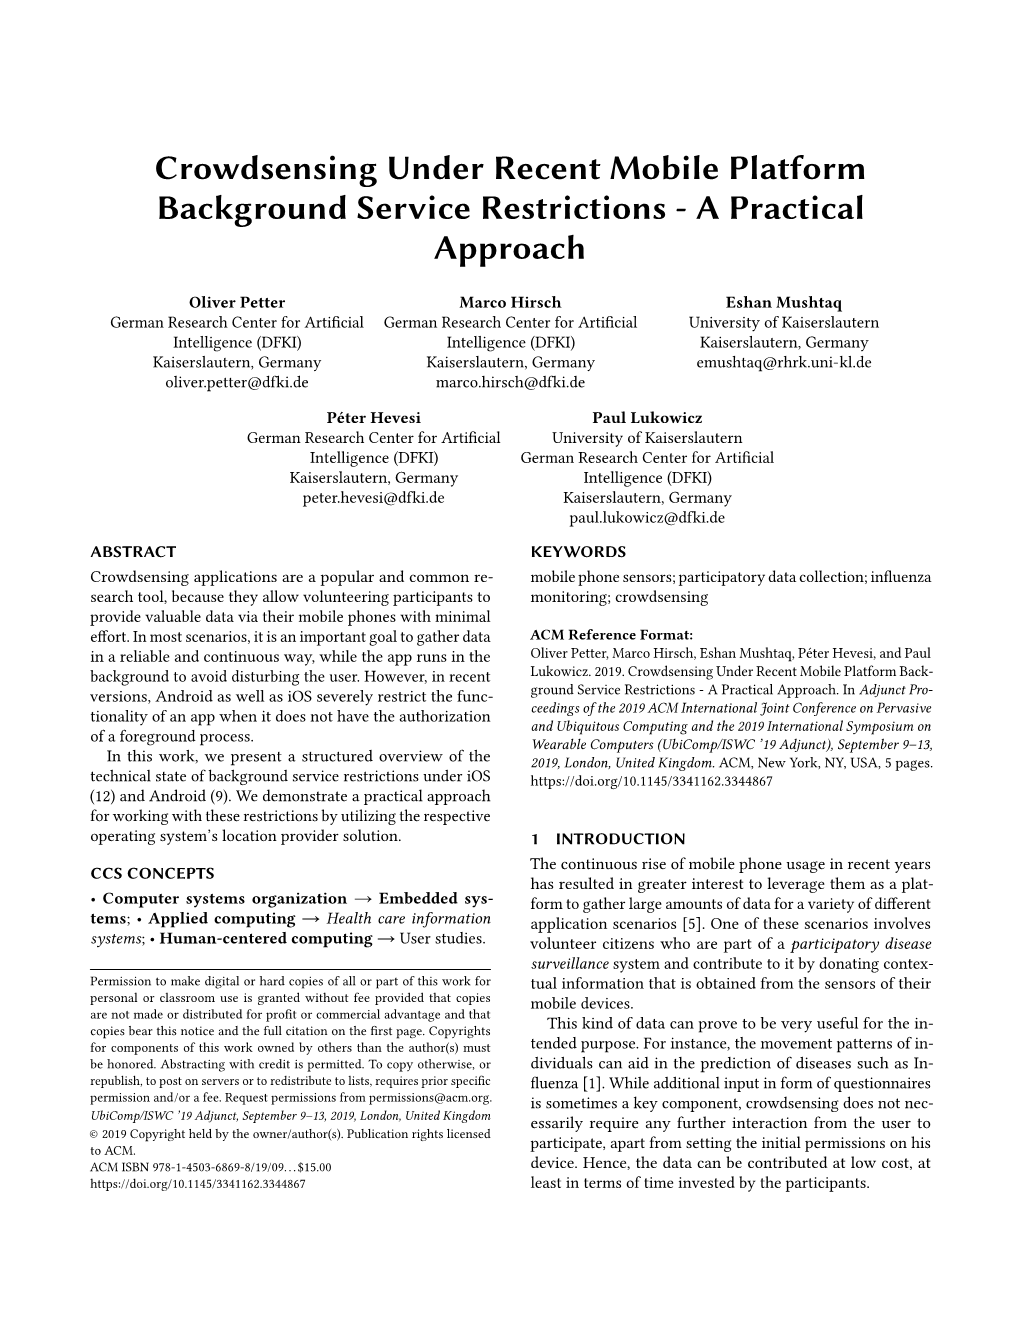 Crowdsensing Under Recent Mobile Platform Background Service Restrictions - a Practical Approach